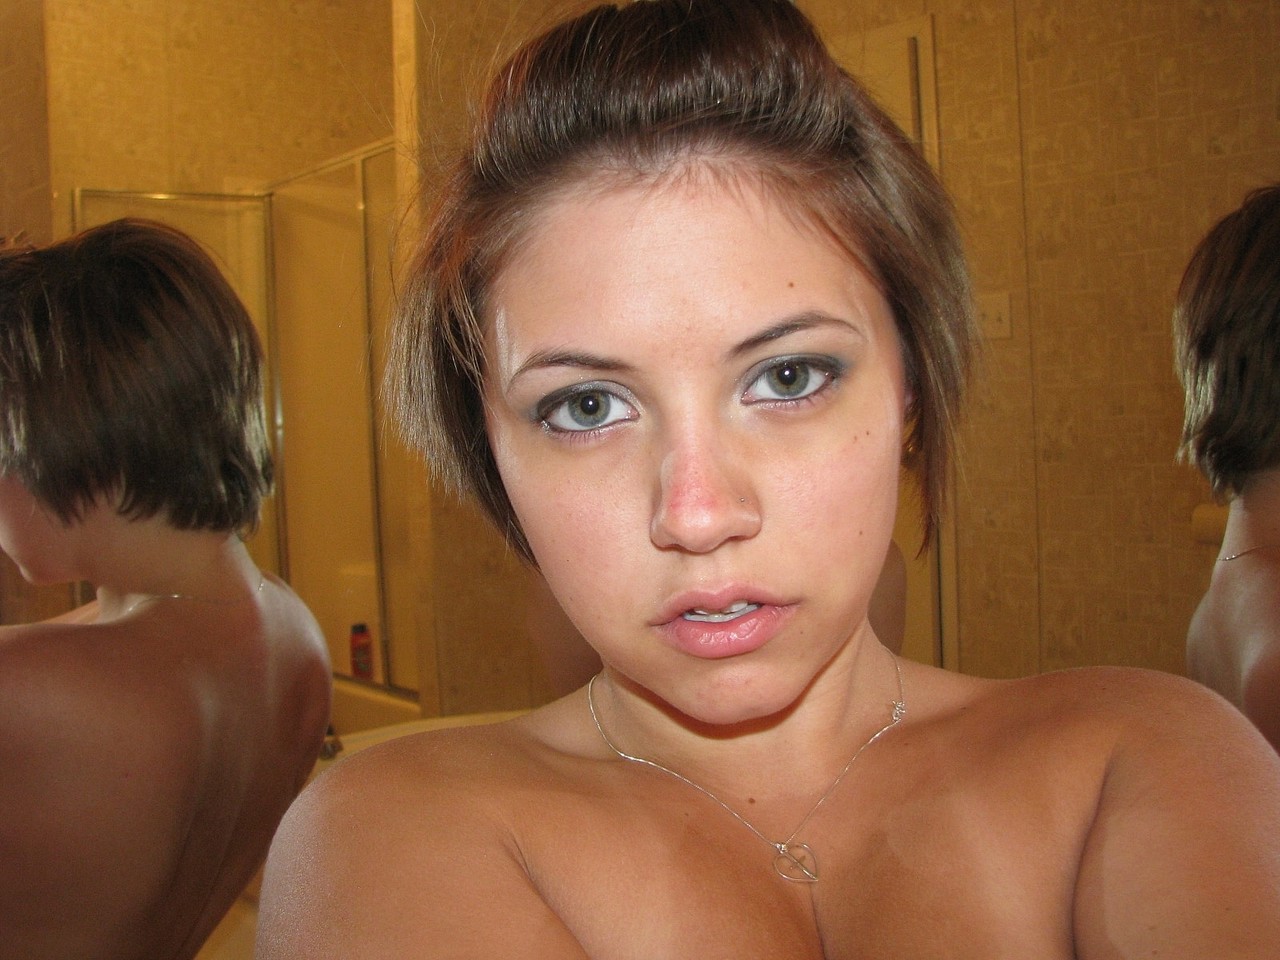 Sexy teen amateur shows off her big breasts while taking nude photos photo porno #427315190 | Teen Girl Photos Pics, Amateur, porno mobile